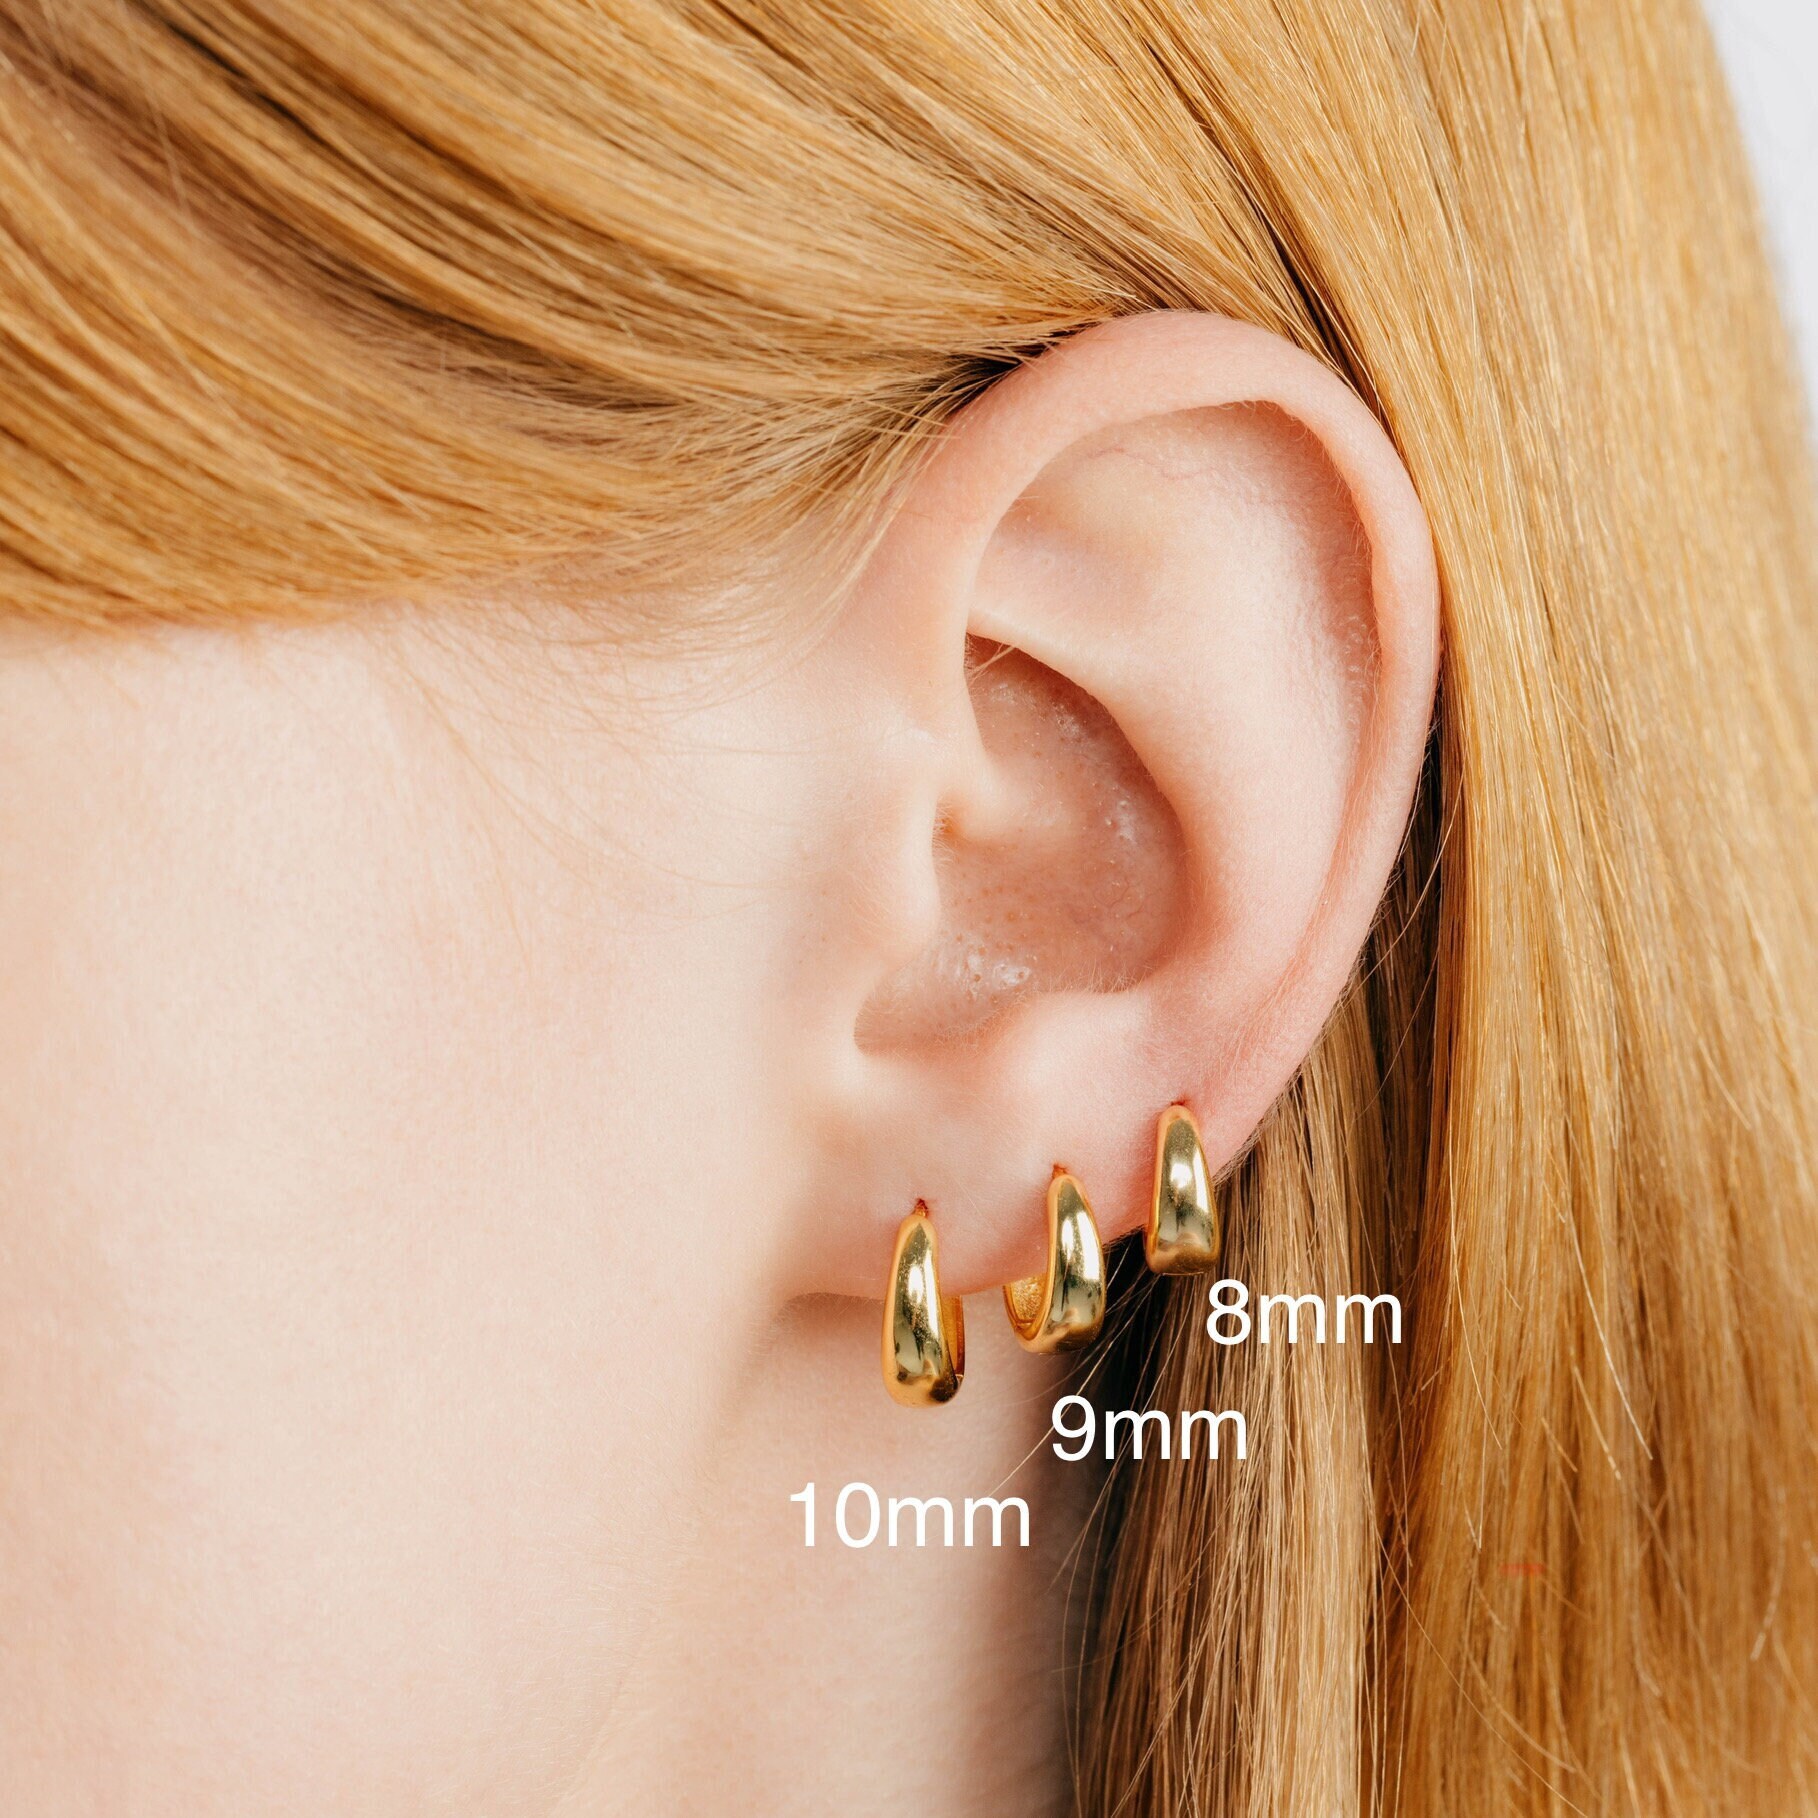 Double Piercing Earring Set, Helix Piercing, Drop Earrings, Handmade  Earrings, Lovely Earrings, Simple Earring, Gold Hoops, Gifts for Her 